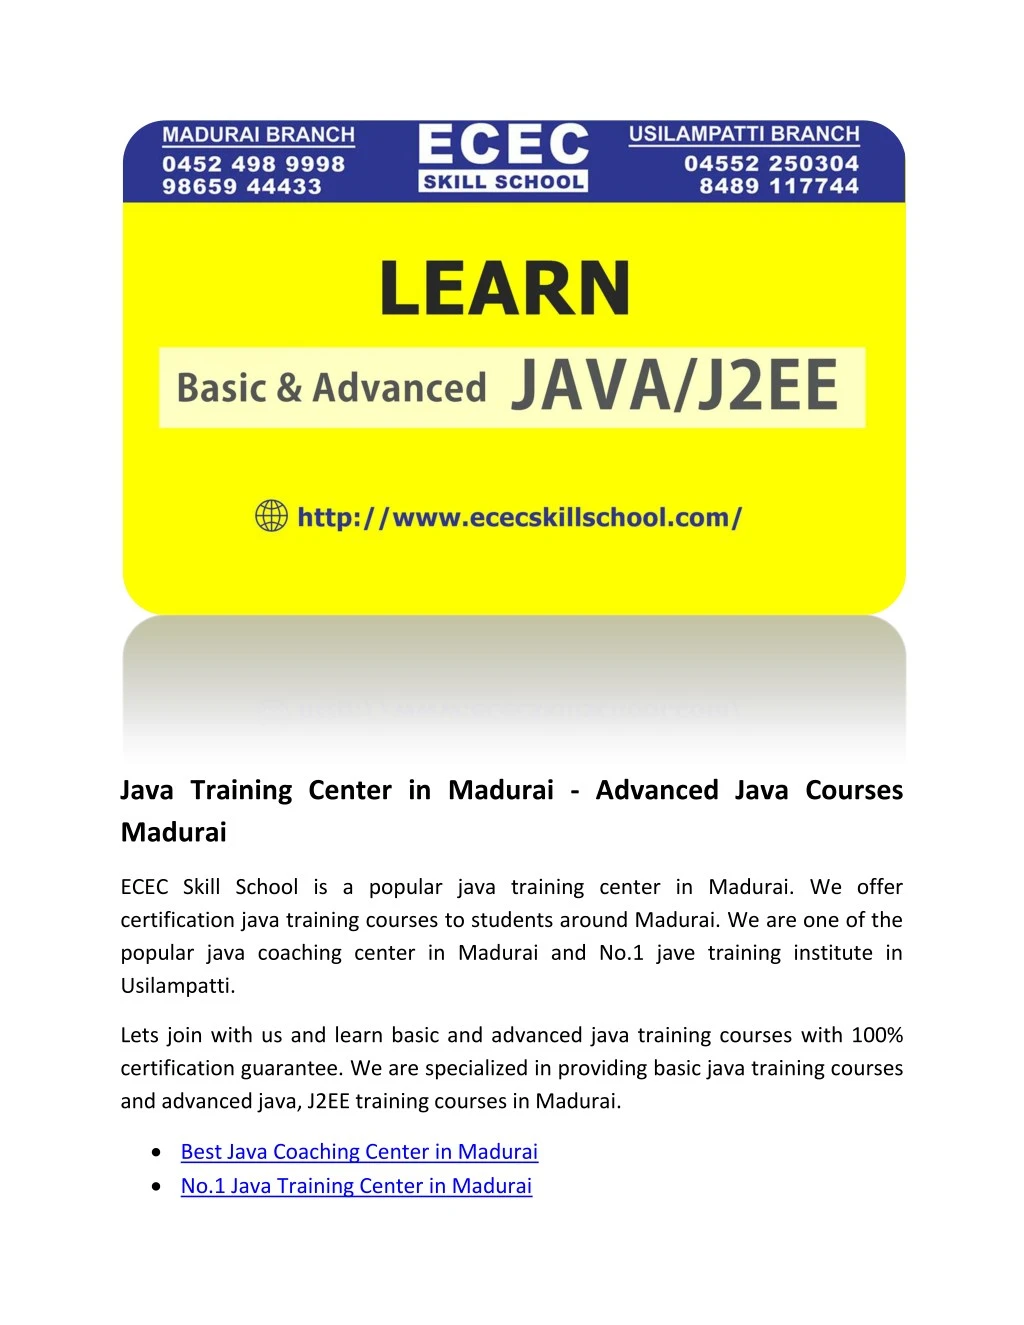 java training center in madurai advanced java